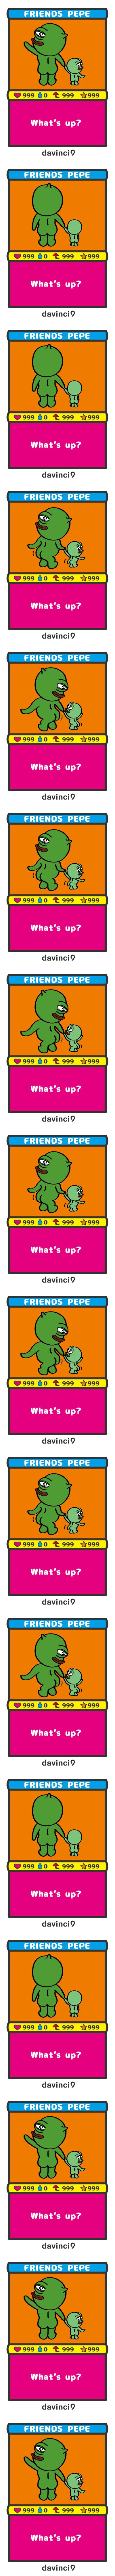 FRIENDSPEPE | Rare Pepe, Series 8 (2016)